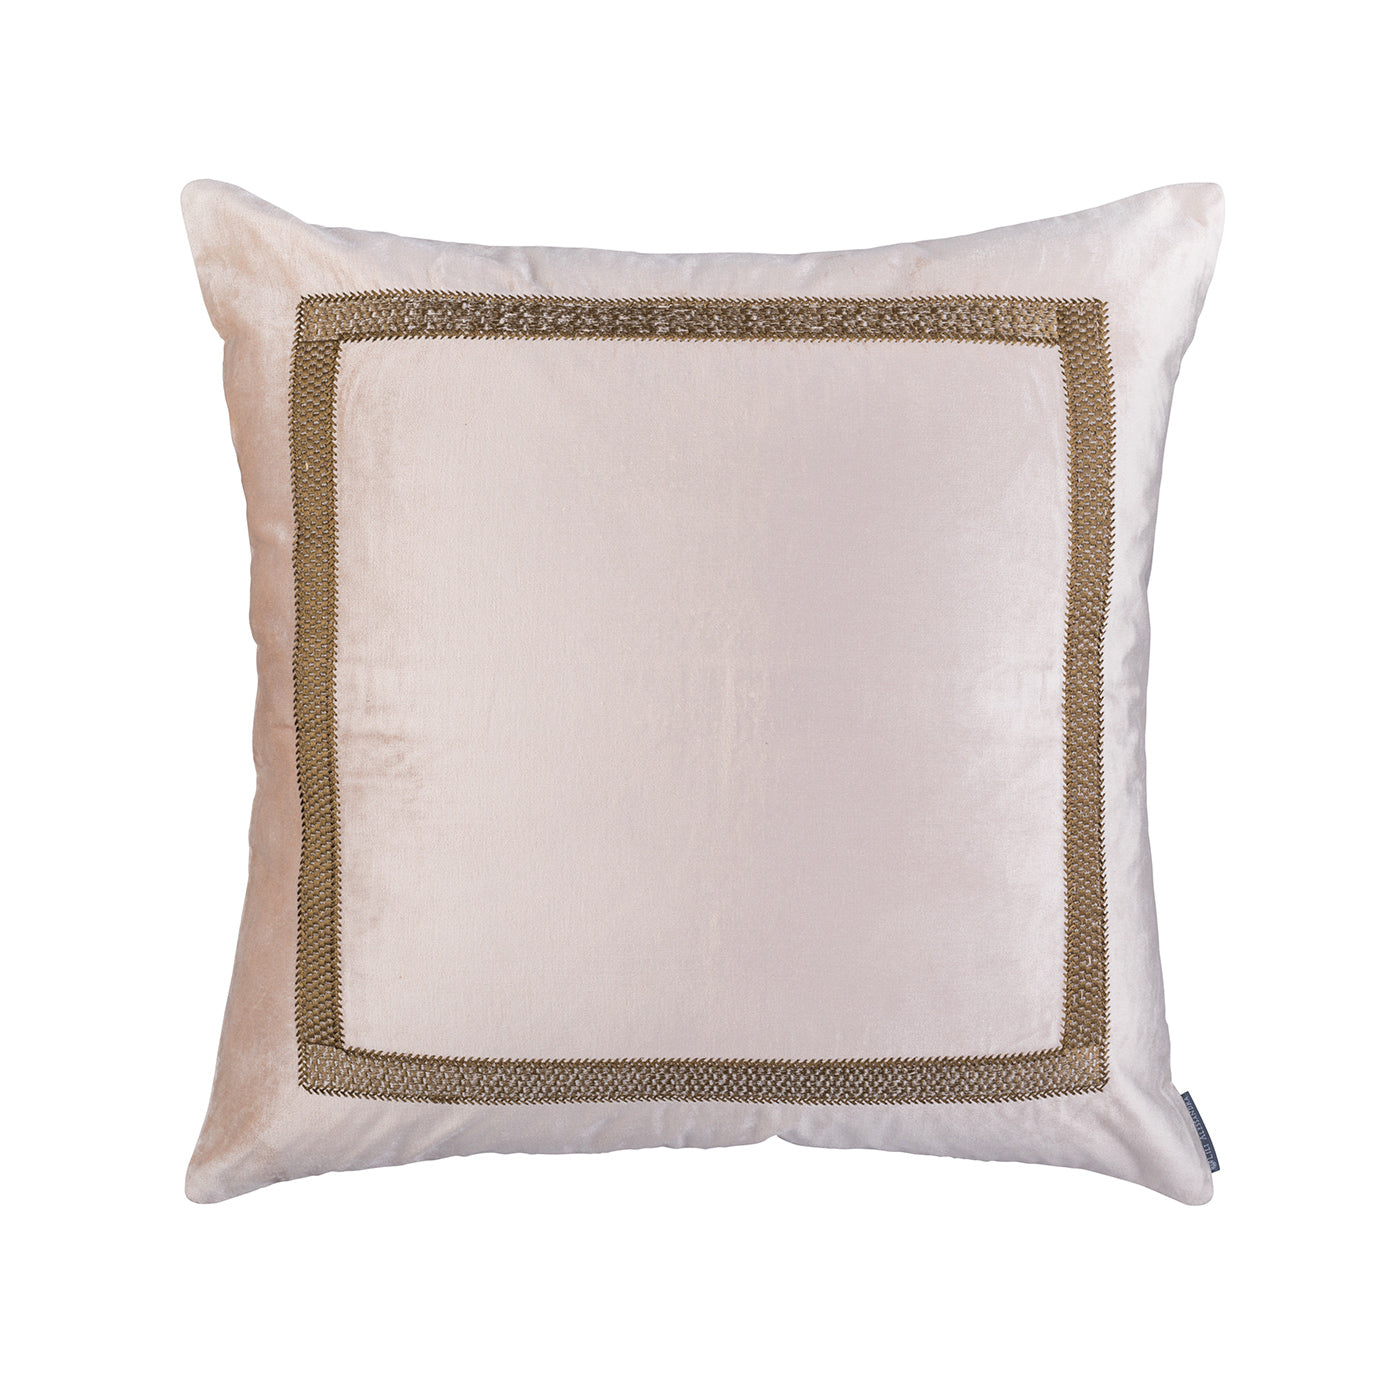 Caesar Decorative Pillow Blush Velvet With Gold Basketweave Machine Embroidery 26X26